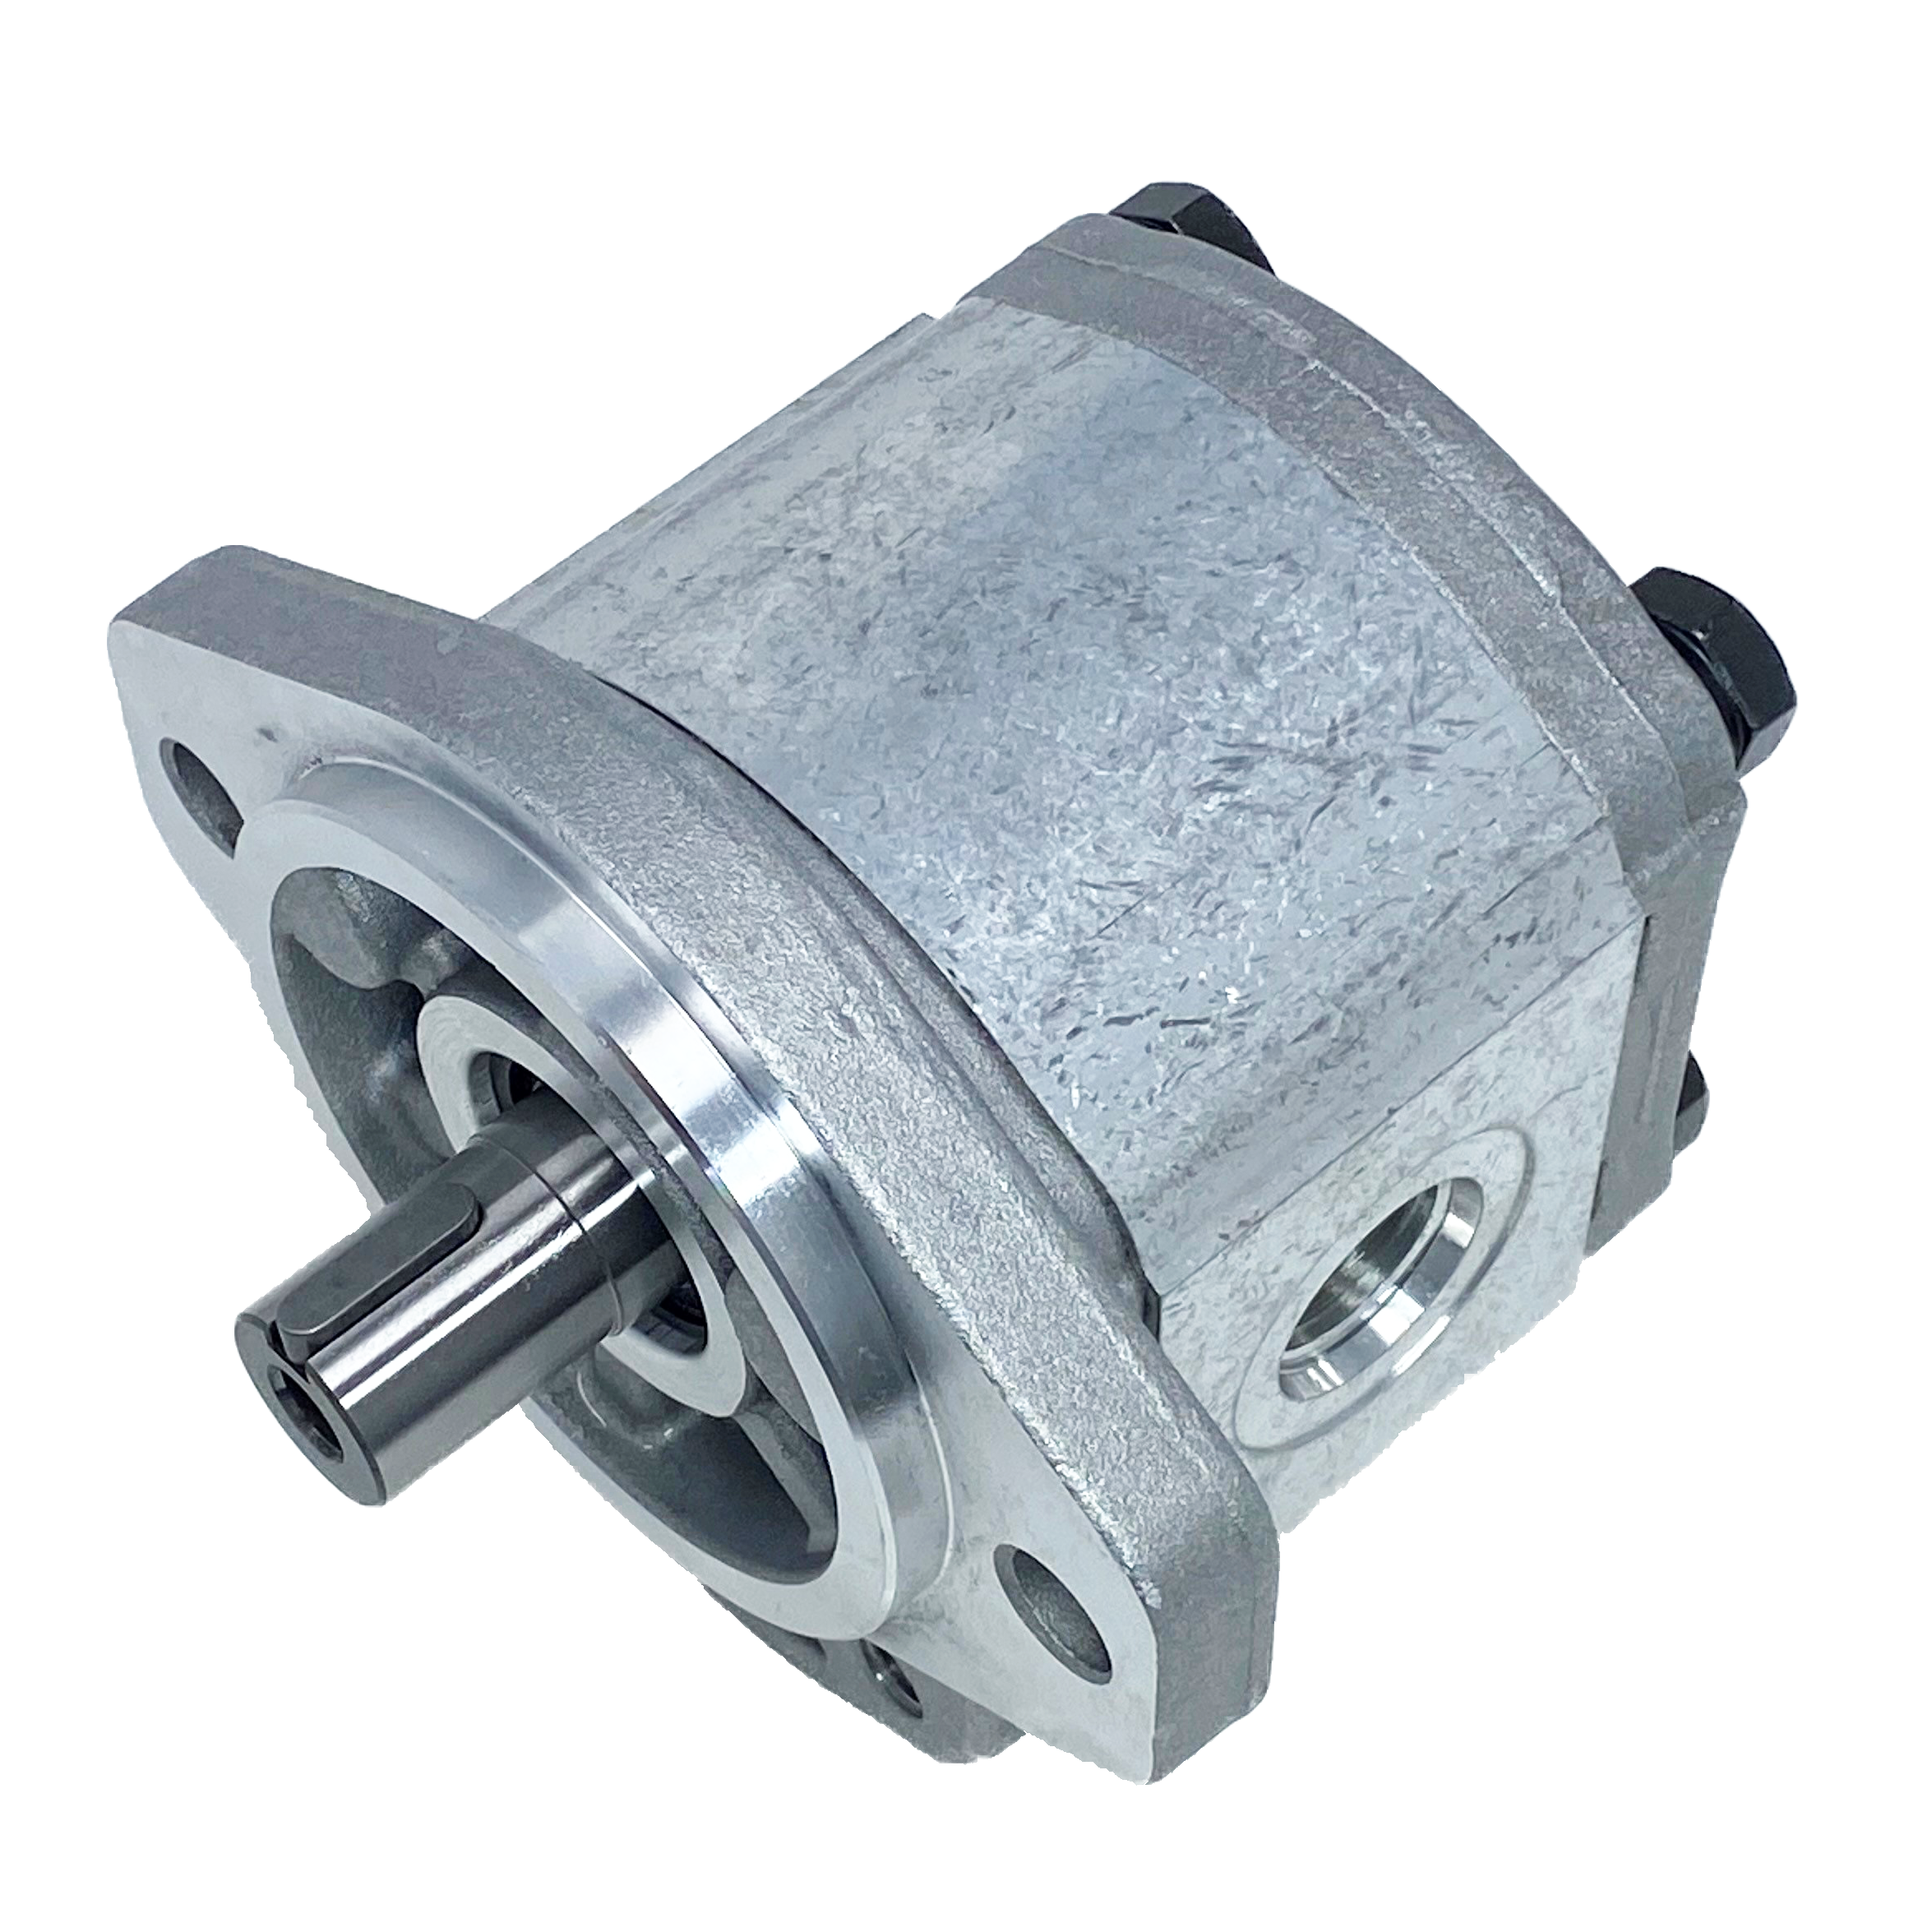 PLM20.11,2R0-50S1-LOC/OC-N-EL : Casappa Polaris Gear Motor, 11.23cc, 3625psi Rated, 3500RPM, Reversible Rear External Drain, 3/4" Bore x 3/16" Key Shaft, SAE A 2-Bolt Flange, 0.625 (5/8") #10 SAE Inlet, 0.625 (5/8") #10 SAE Outlet, Aluminum Body & Flange